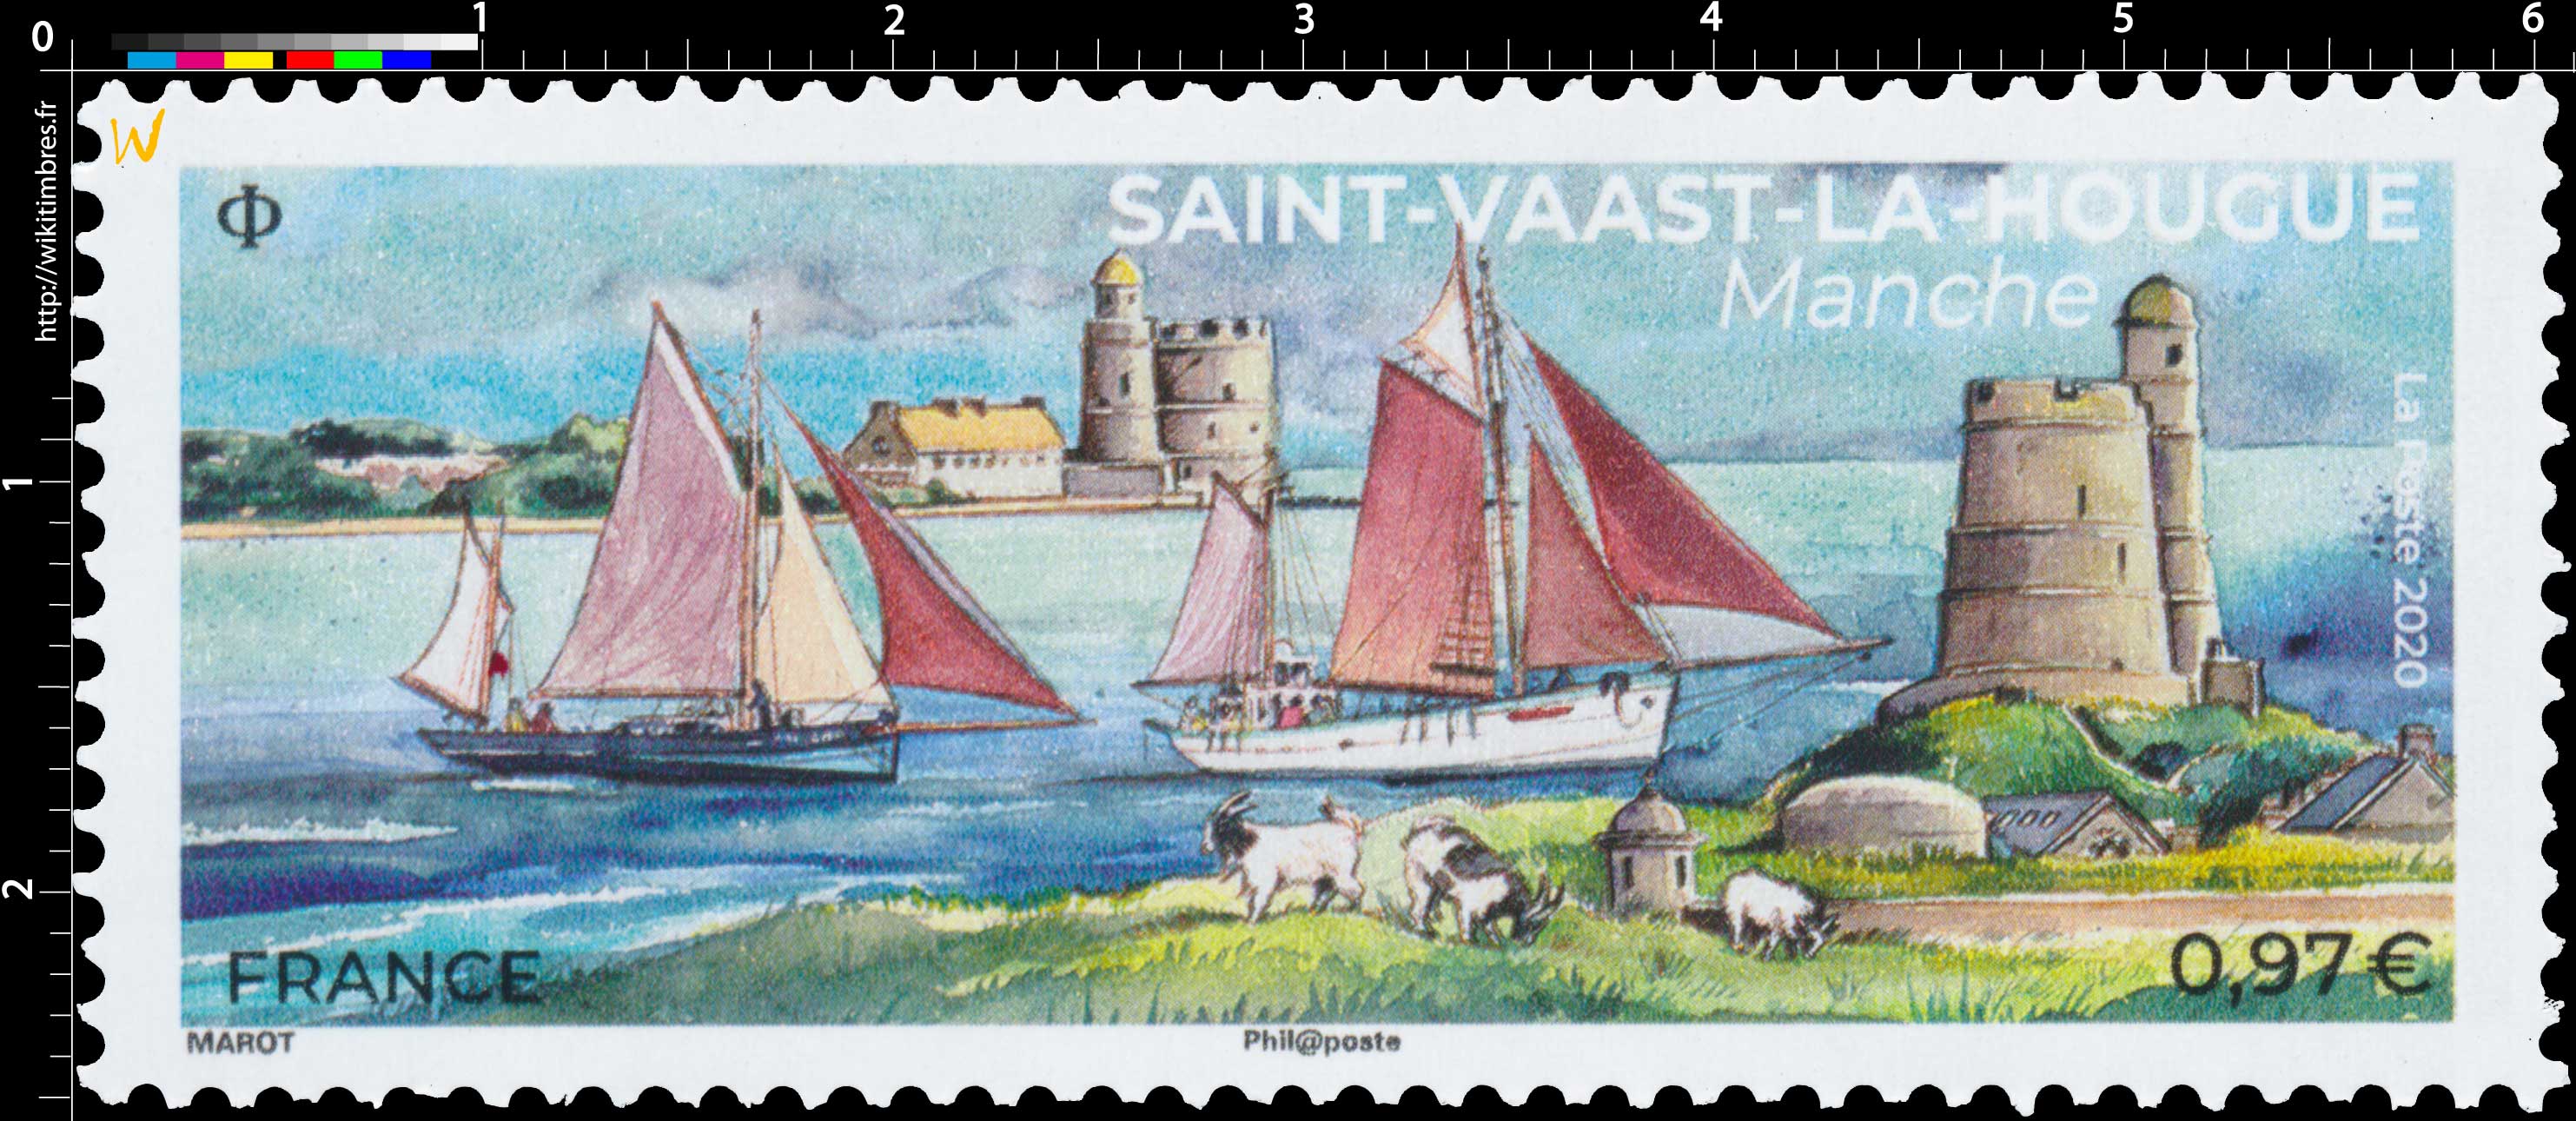 2020 Saint-Vaast-La-Hougue Manche